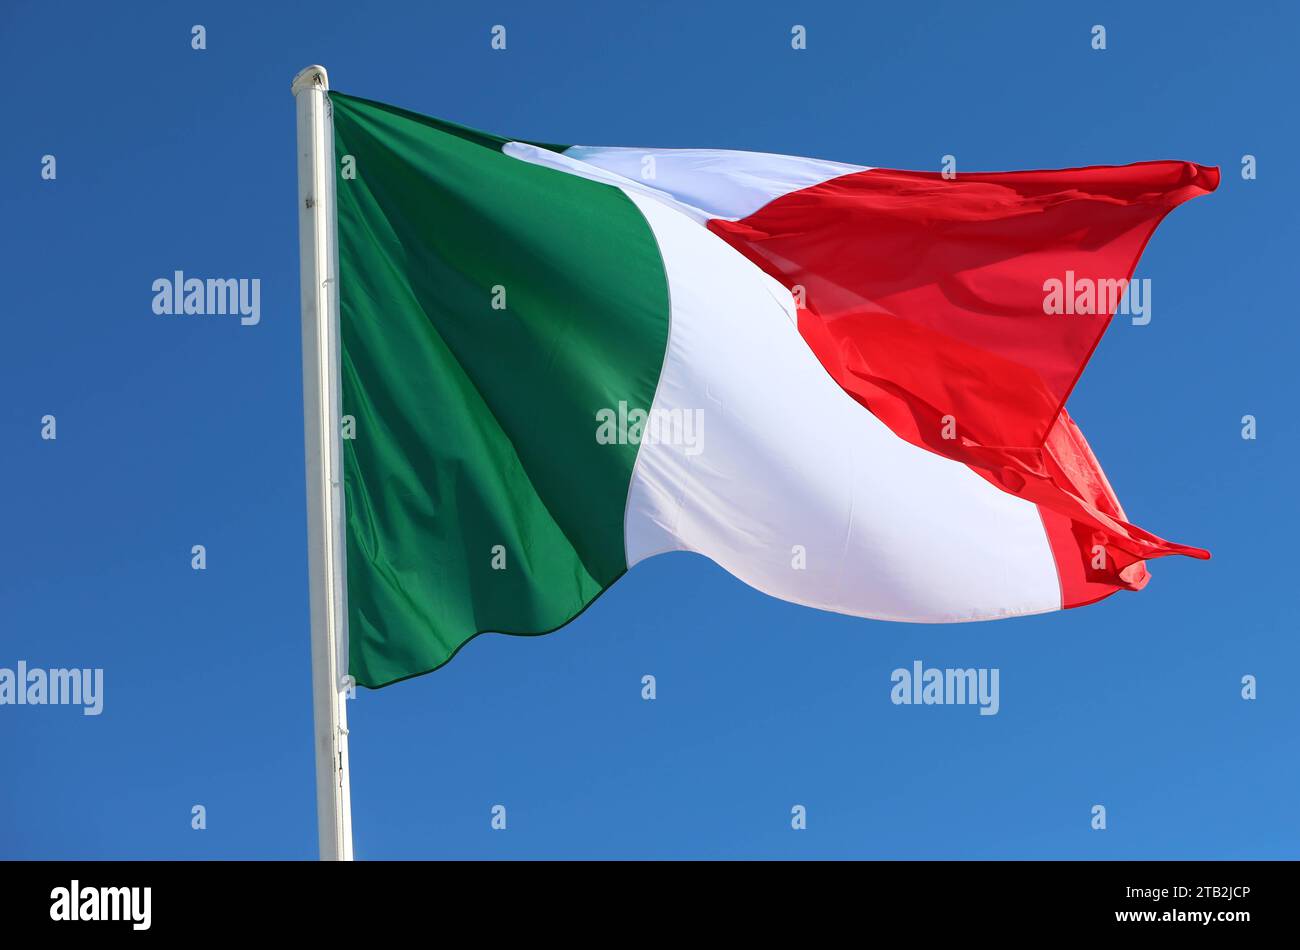 Die Flagge von Italien weht im Wind. Blauer Himmel. Italienische Flagge im Wind. *** The flag of Italy waving in the wind Blue sky Italian flag in the wind Credit: Imago/Alamy Live News Stock Photo